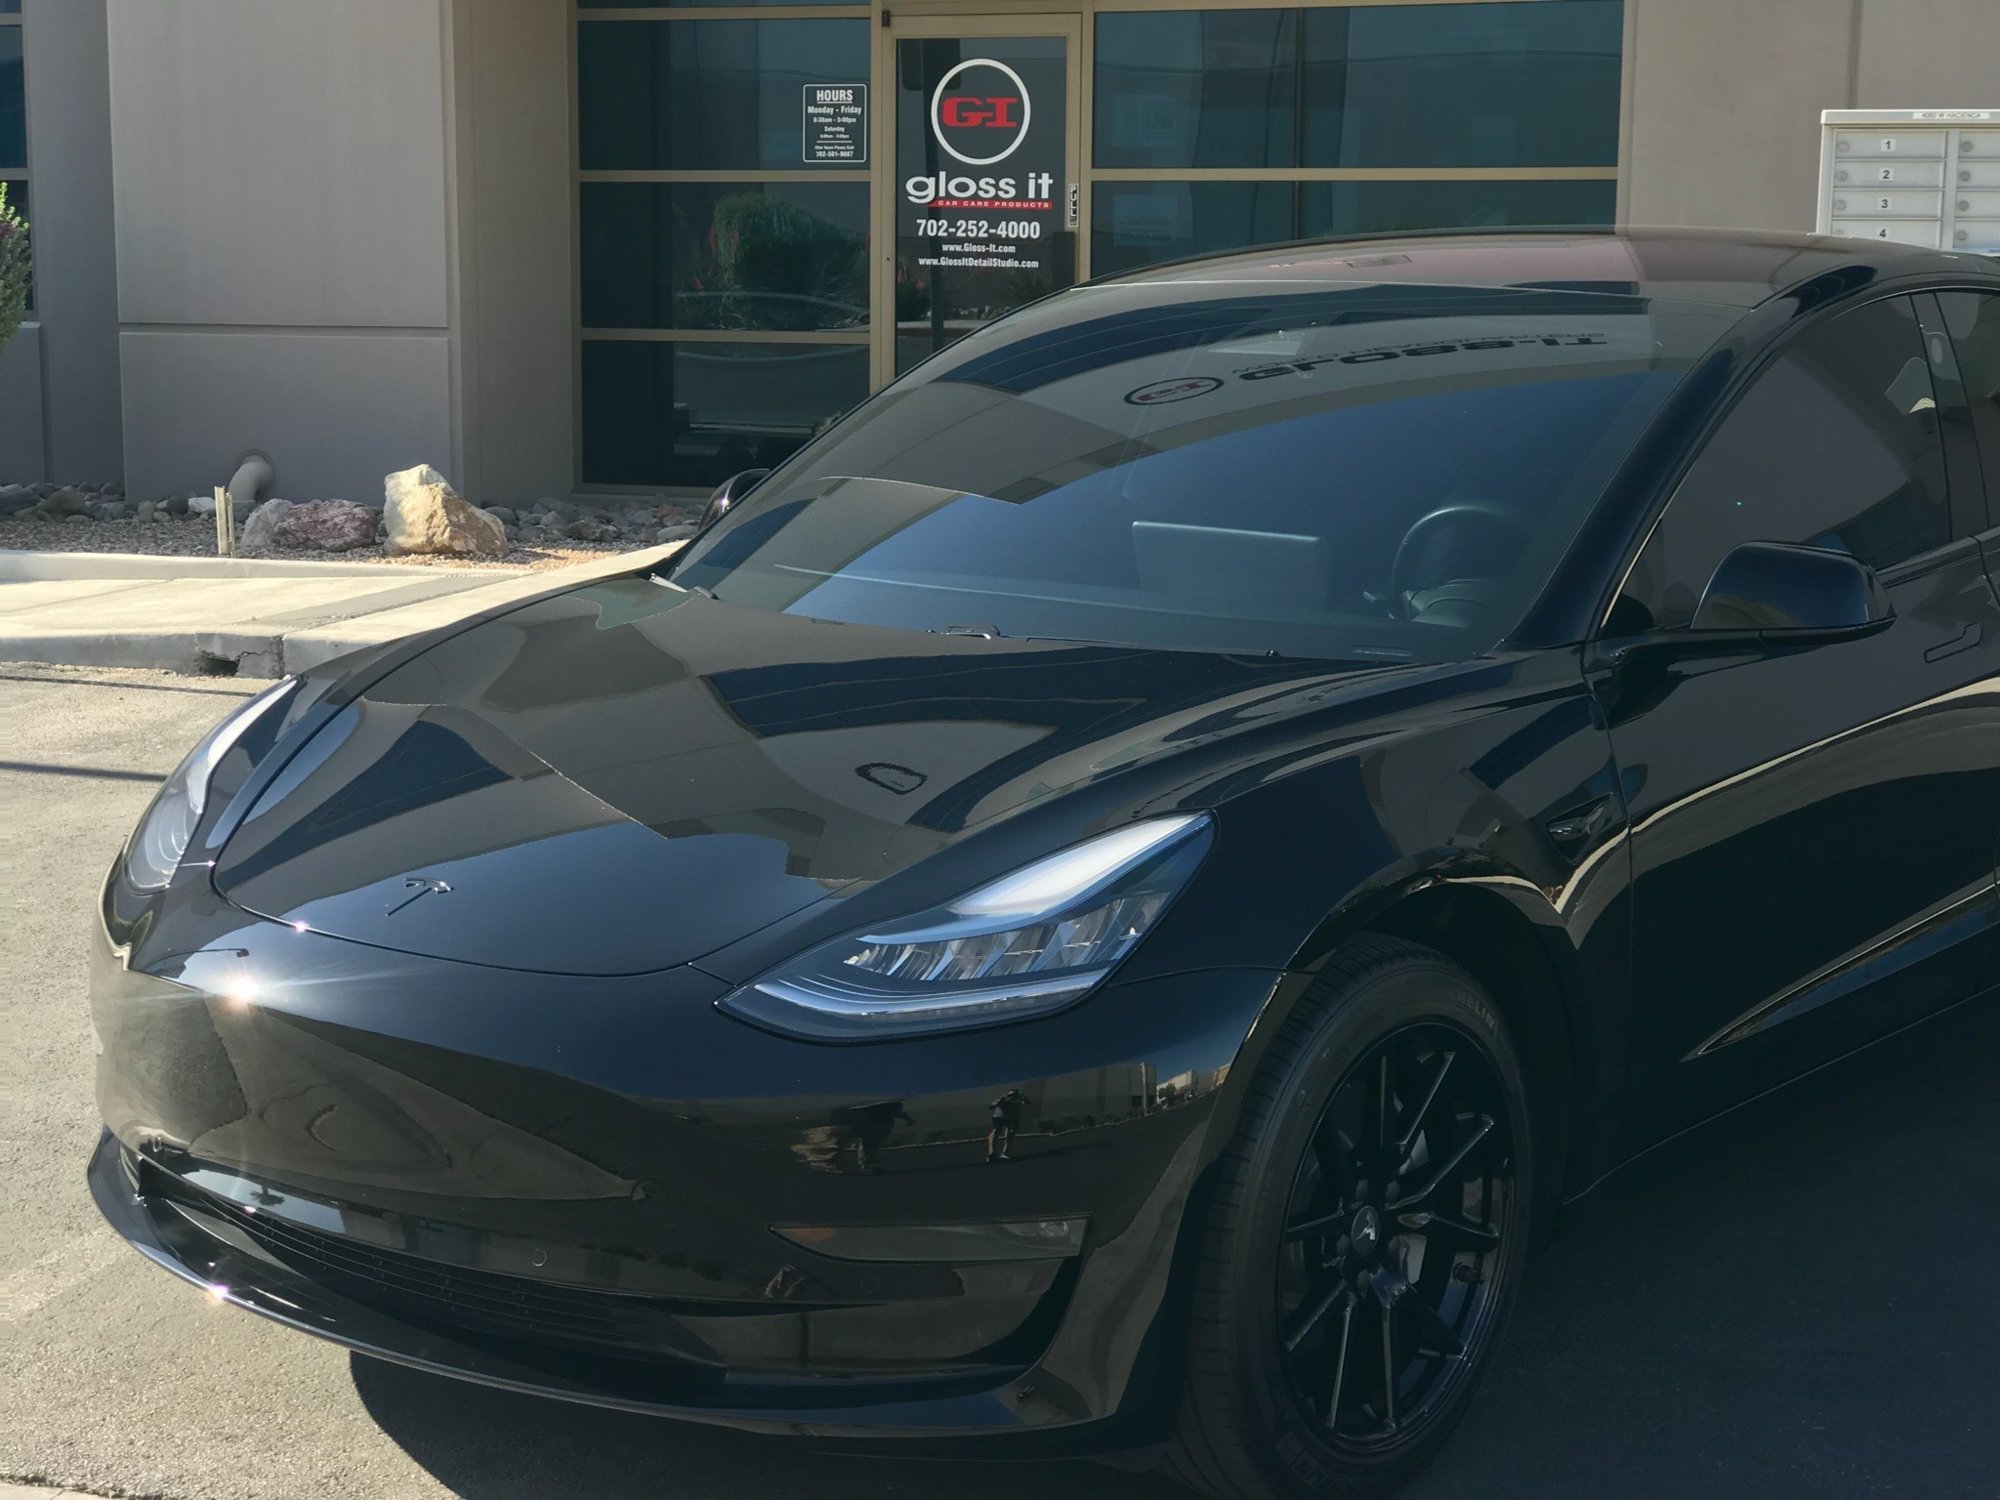 Tesla Model 3 after GlossIt.jpg